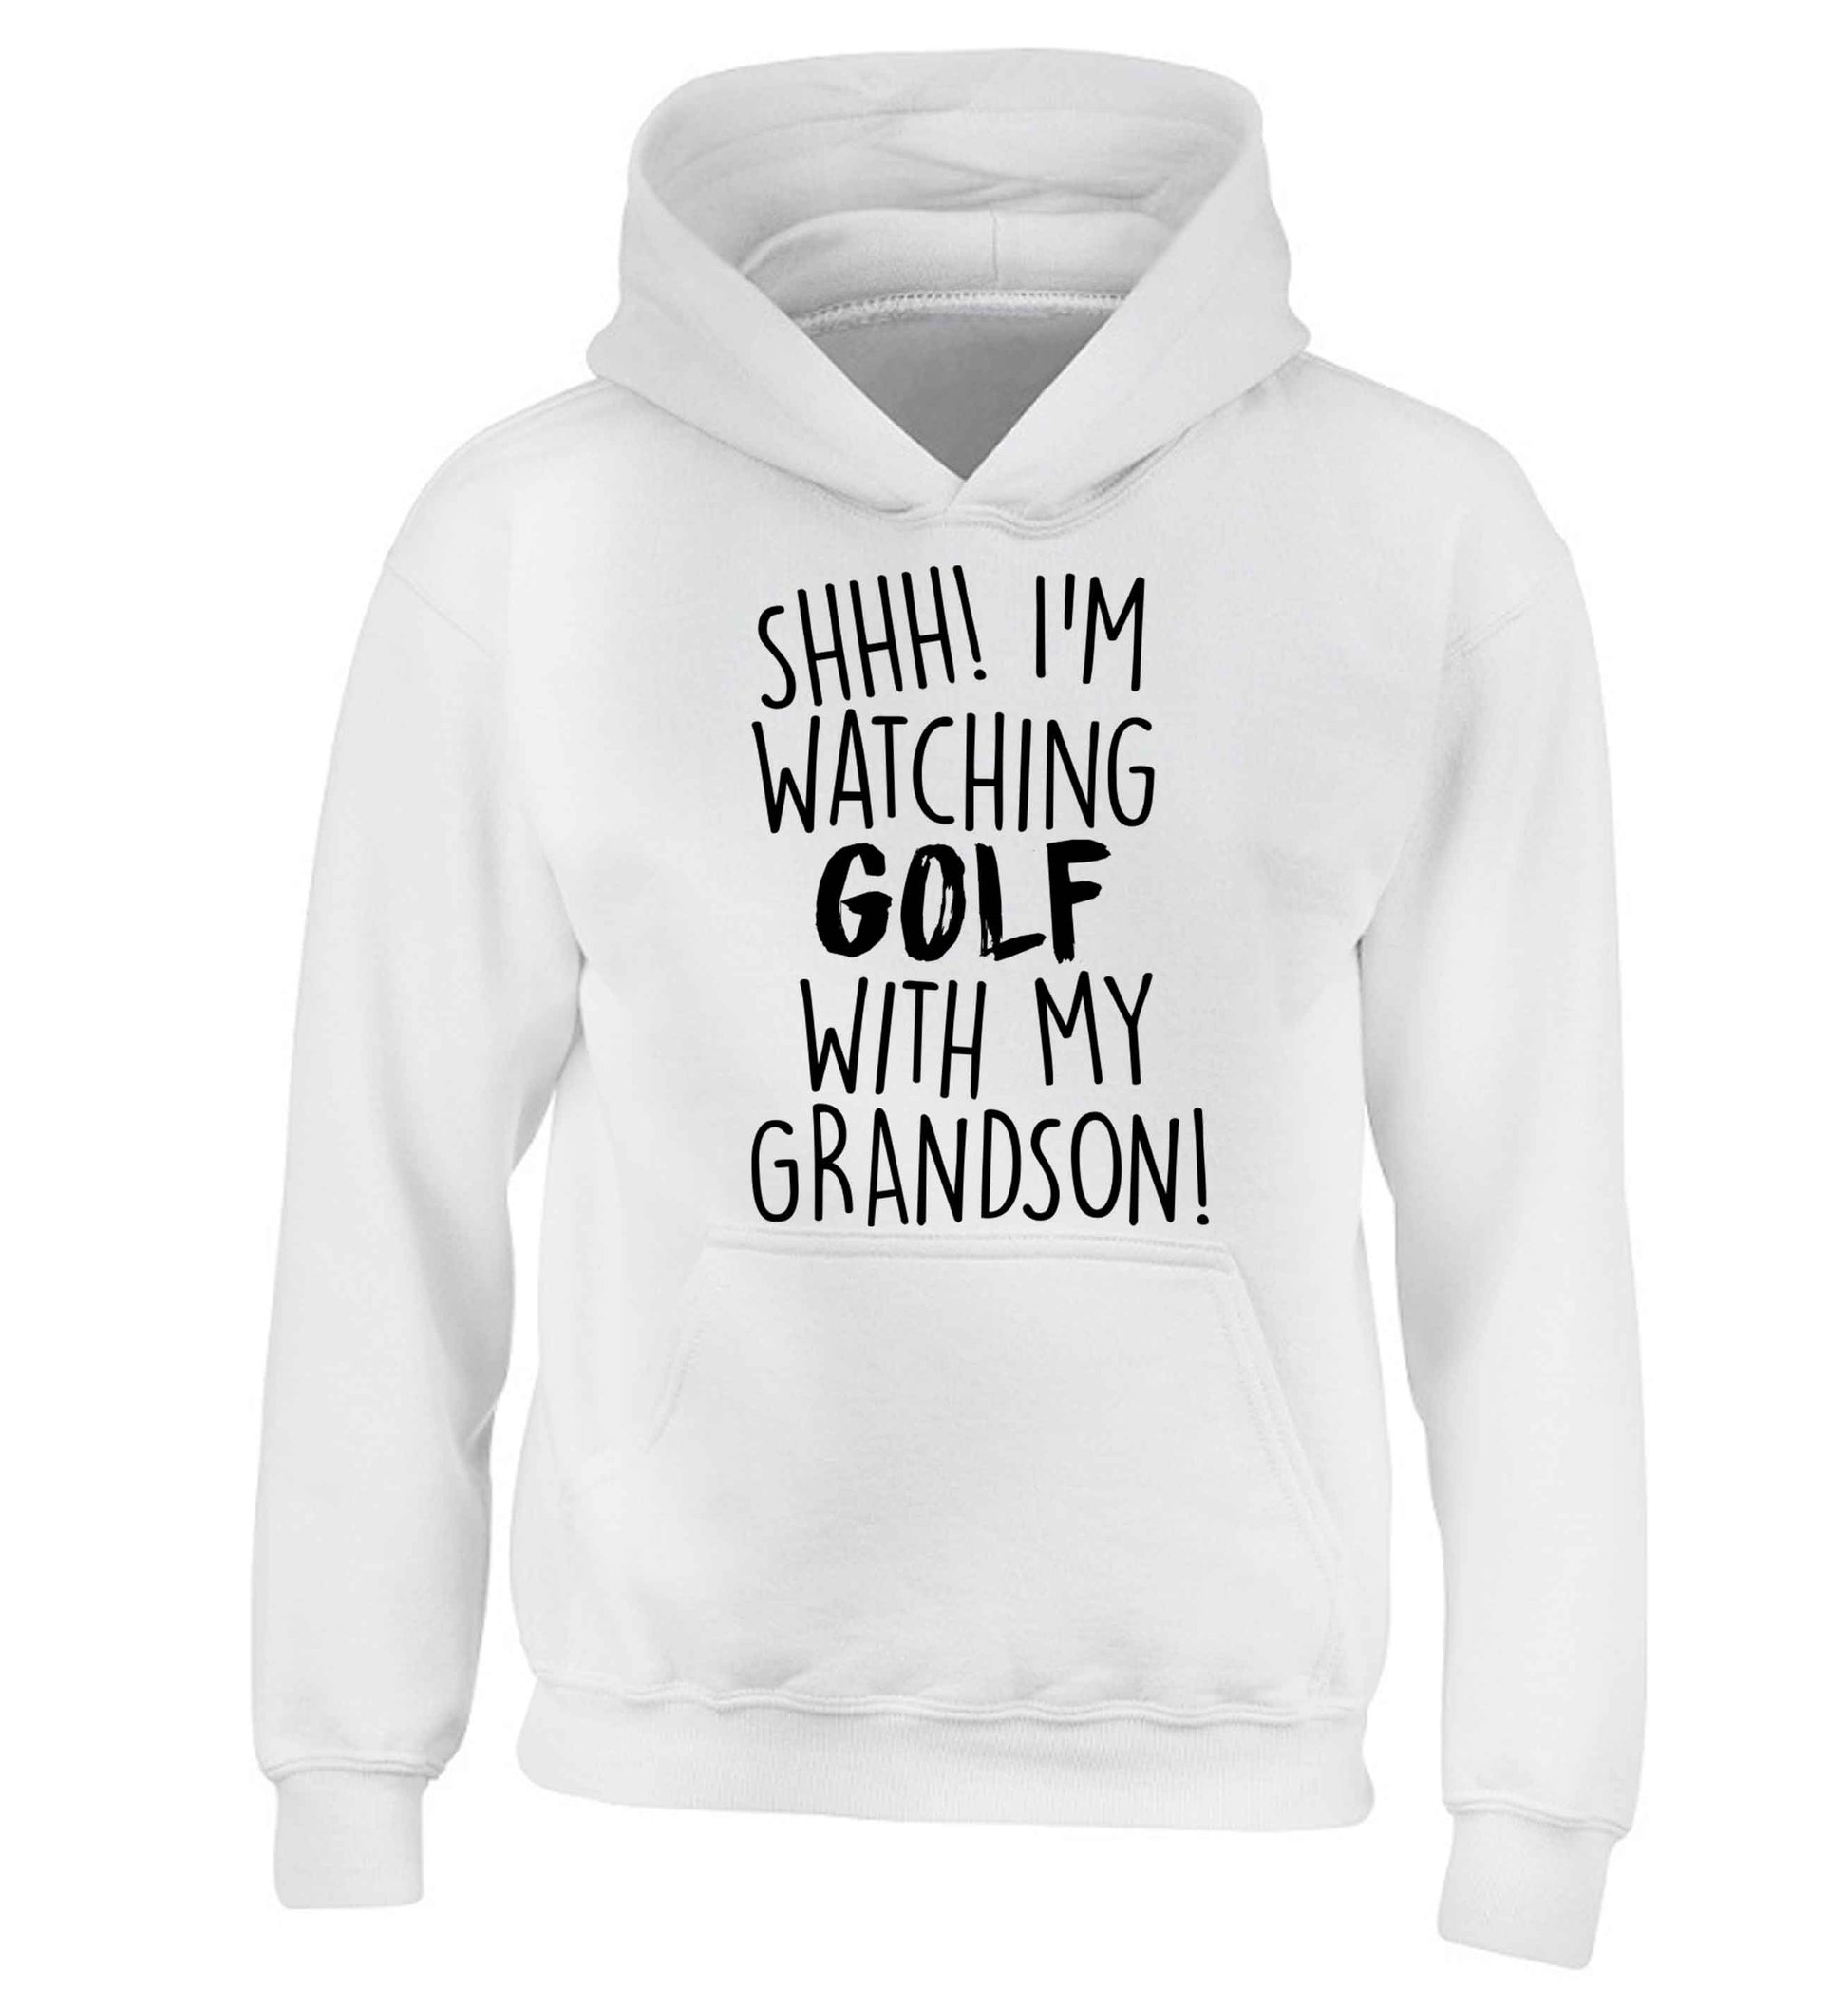 Shh I'm watching golf with my grandsonchildren's white hoodie 12-13 Years